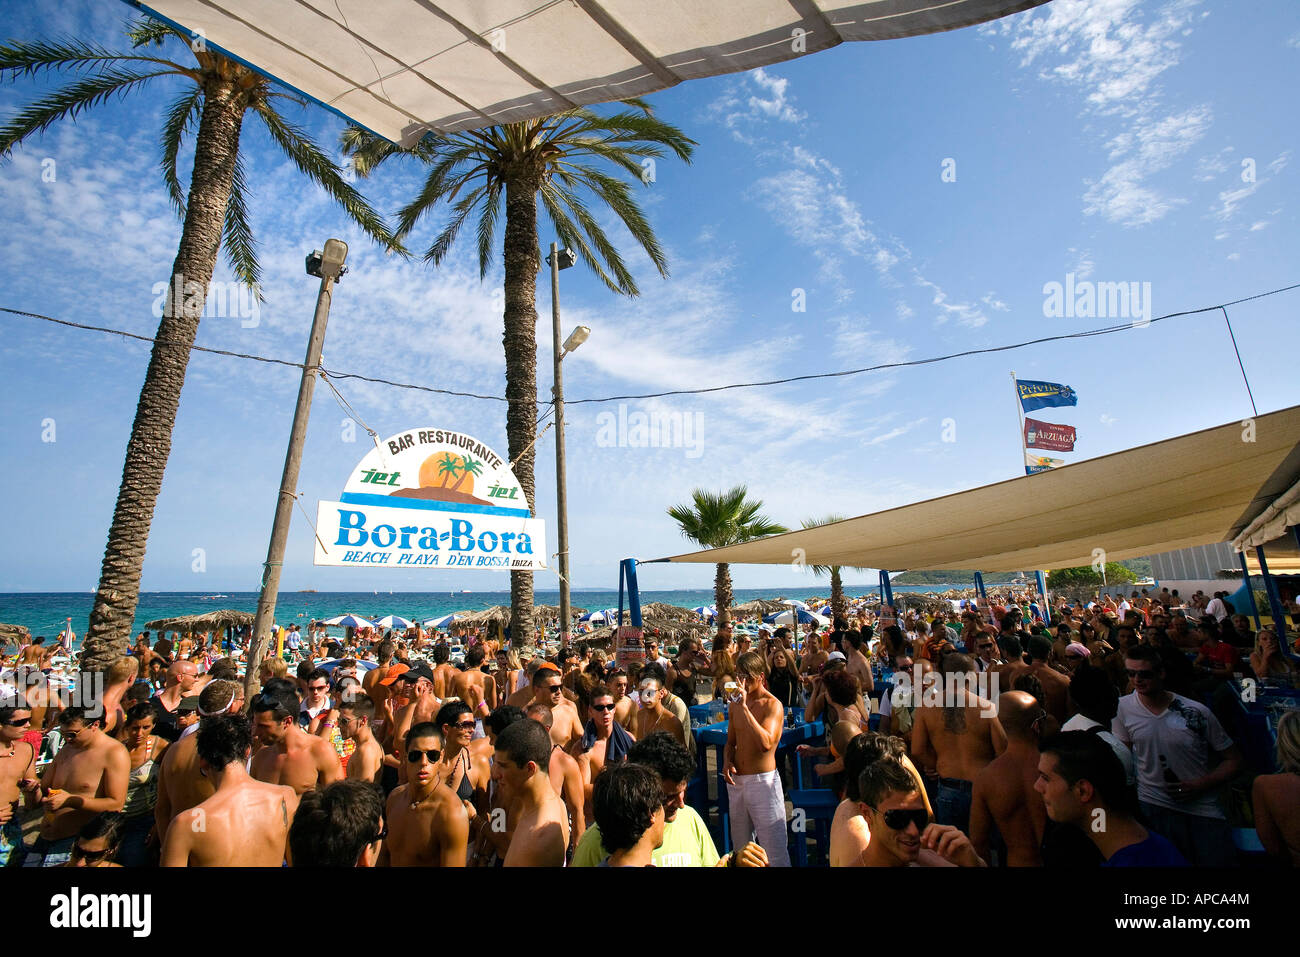 Bora-Bora, Playa d'en Bossa, Ibiza, the Balearic Islands, Spain Stock Photo